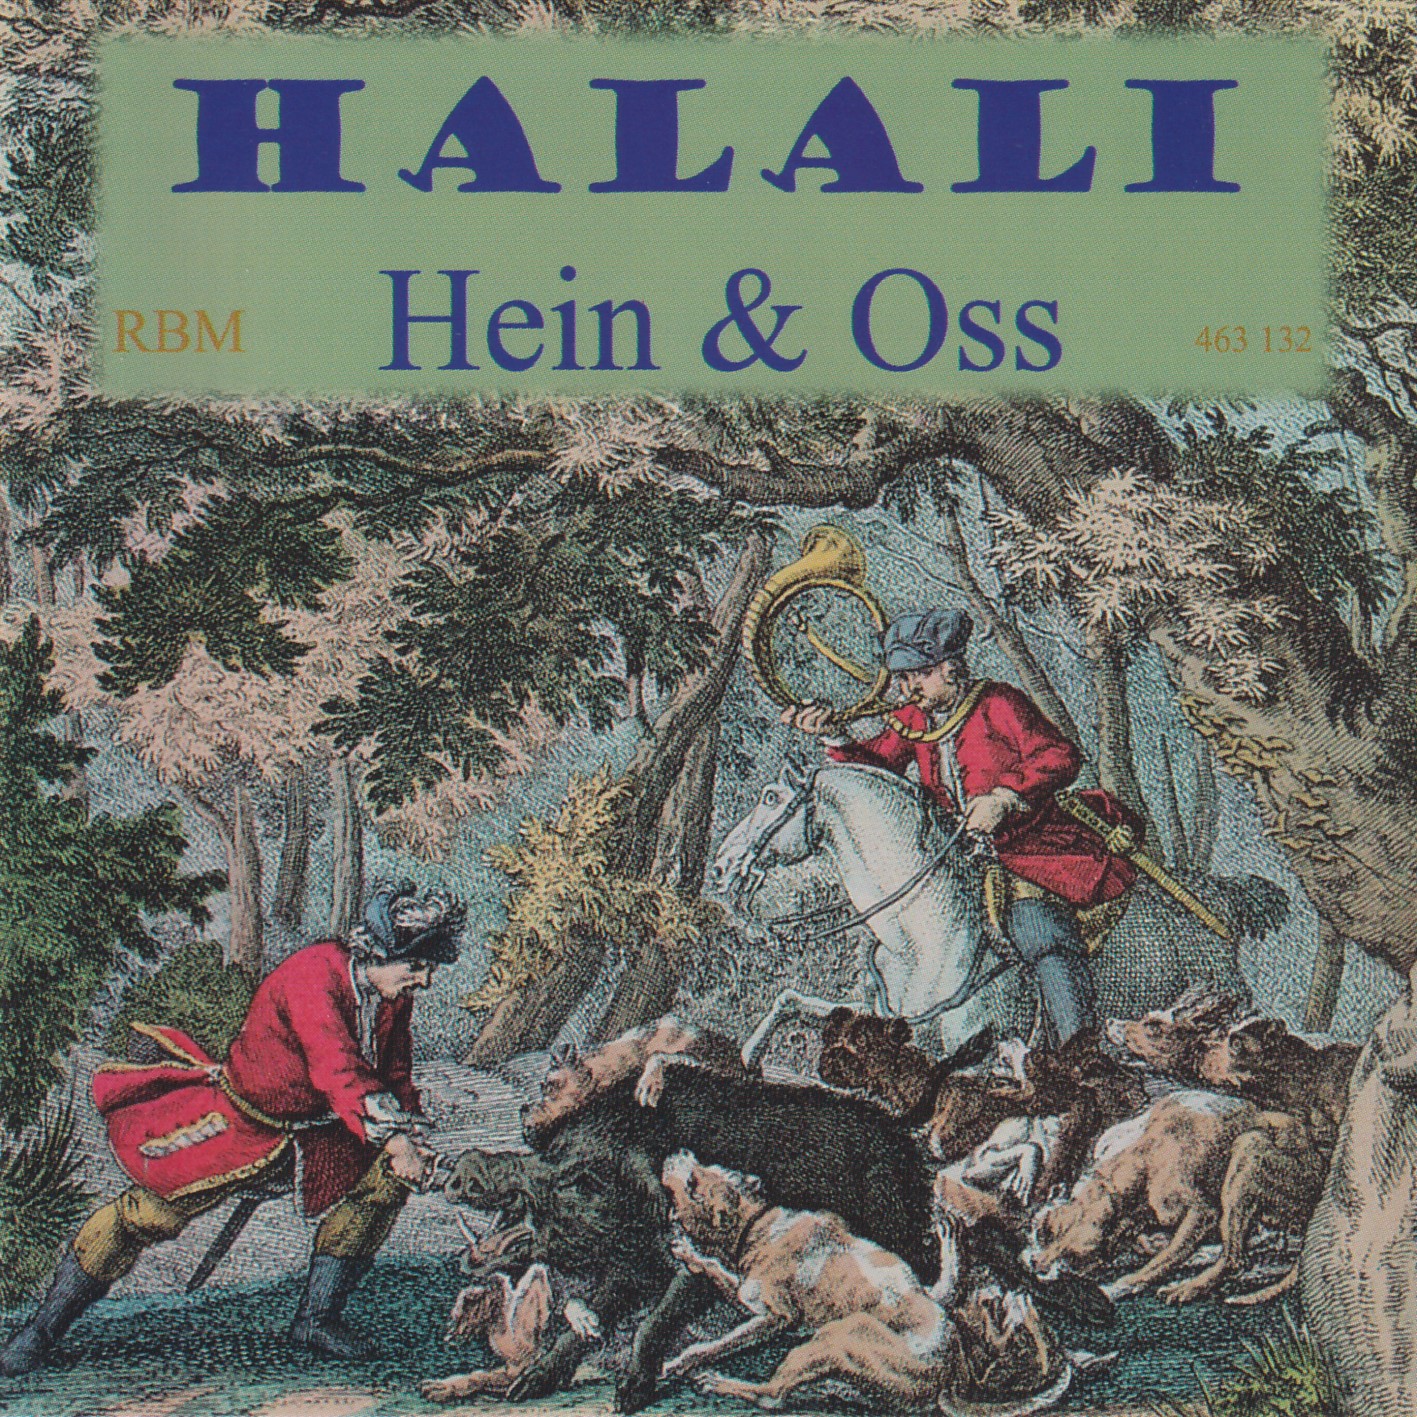 Hein & Oss - Halali